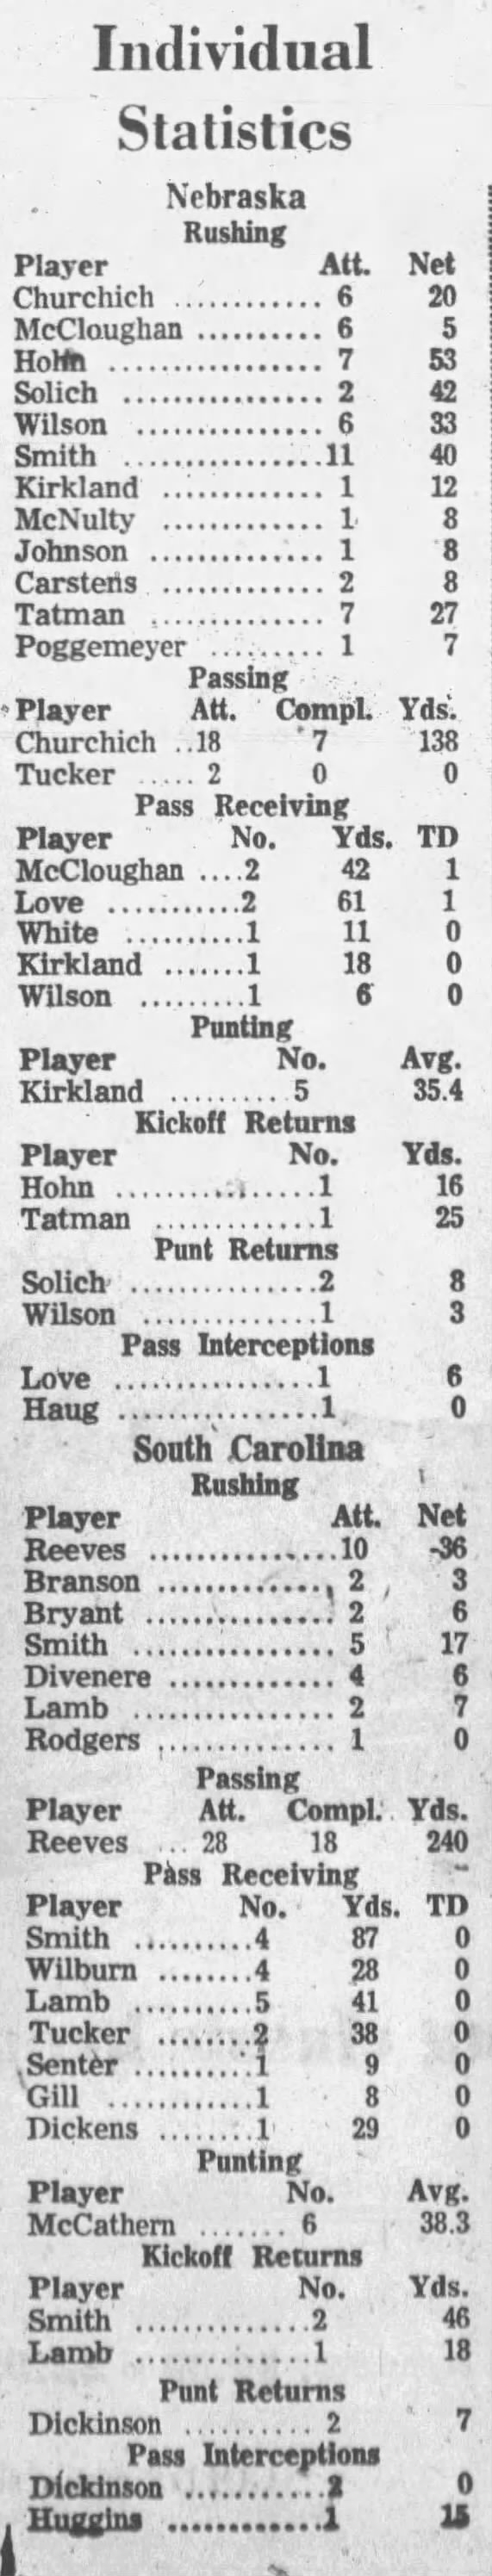 1964 Nebraska-South Carolina football game stats